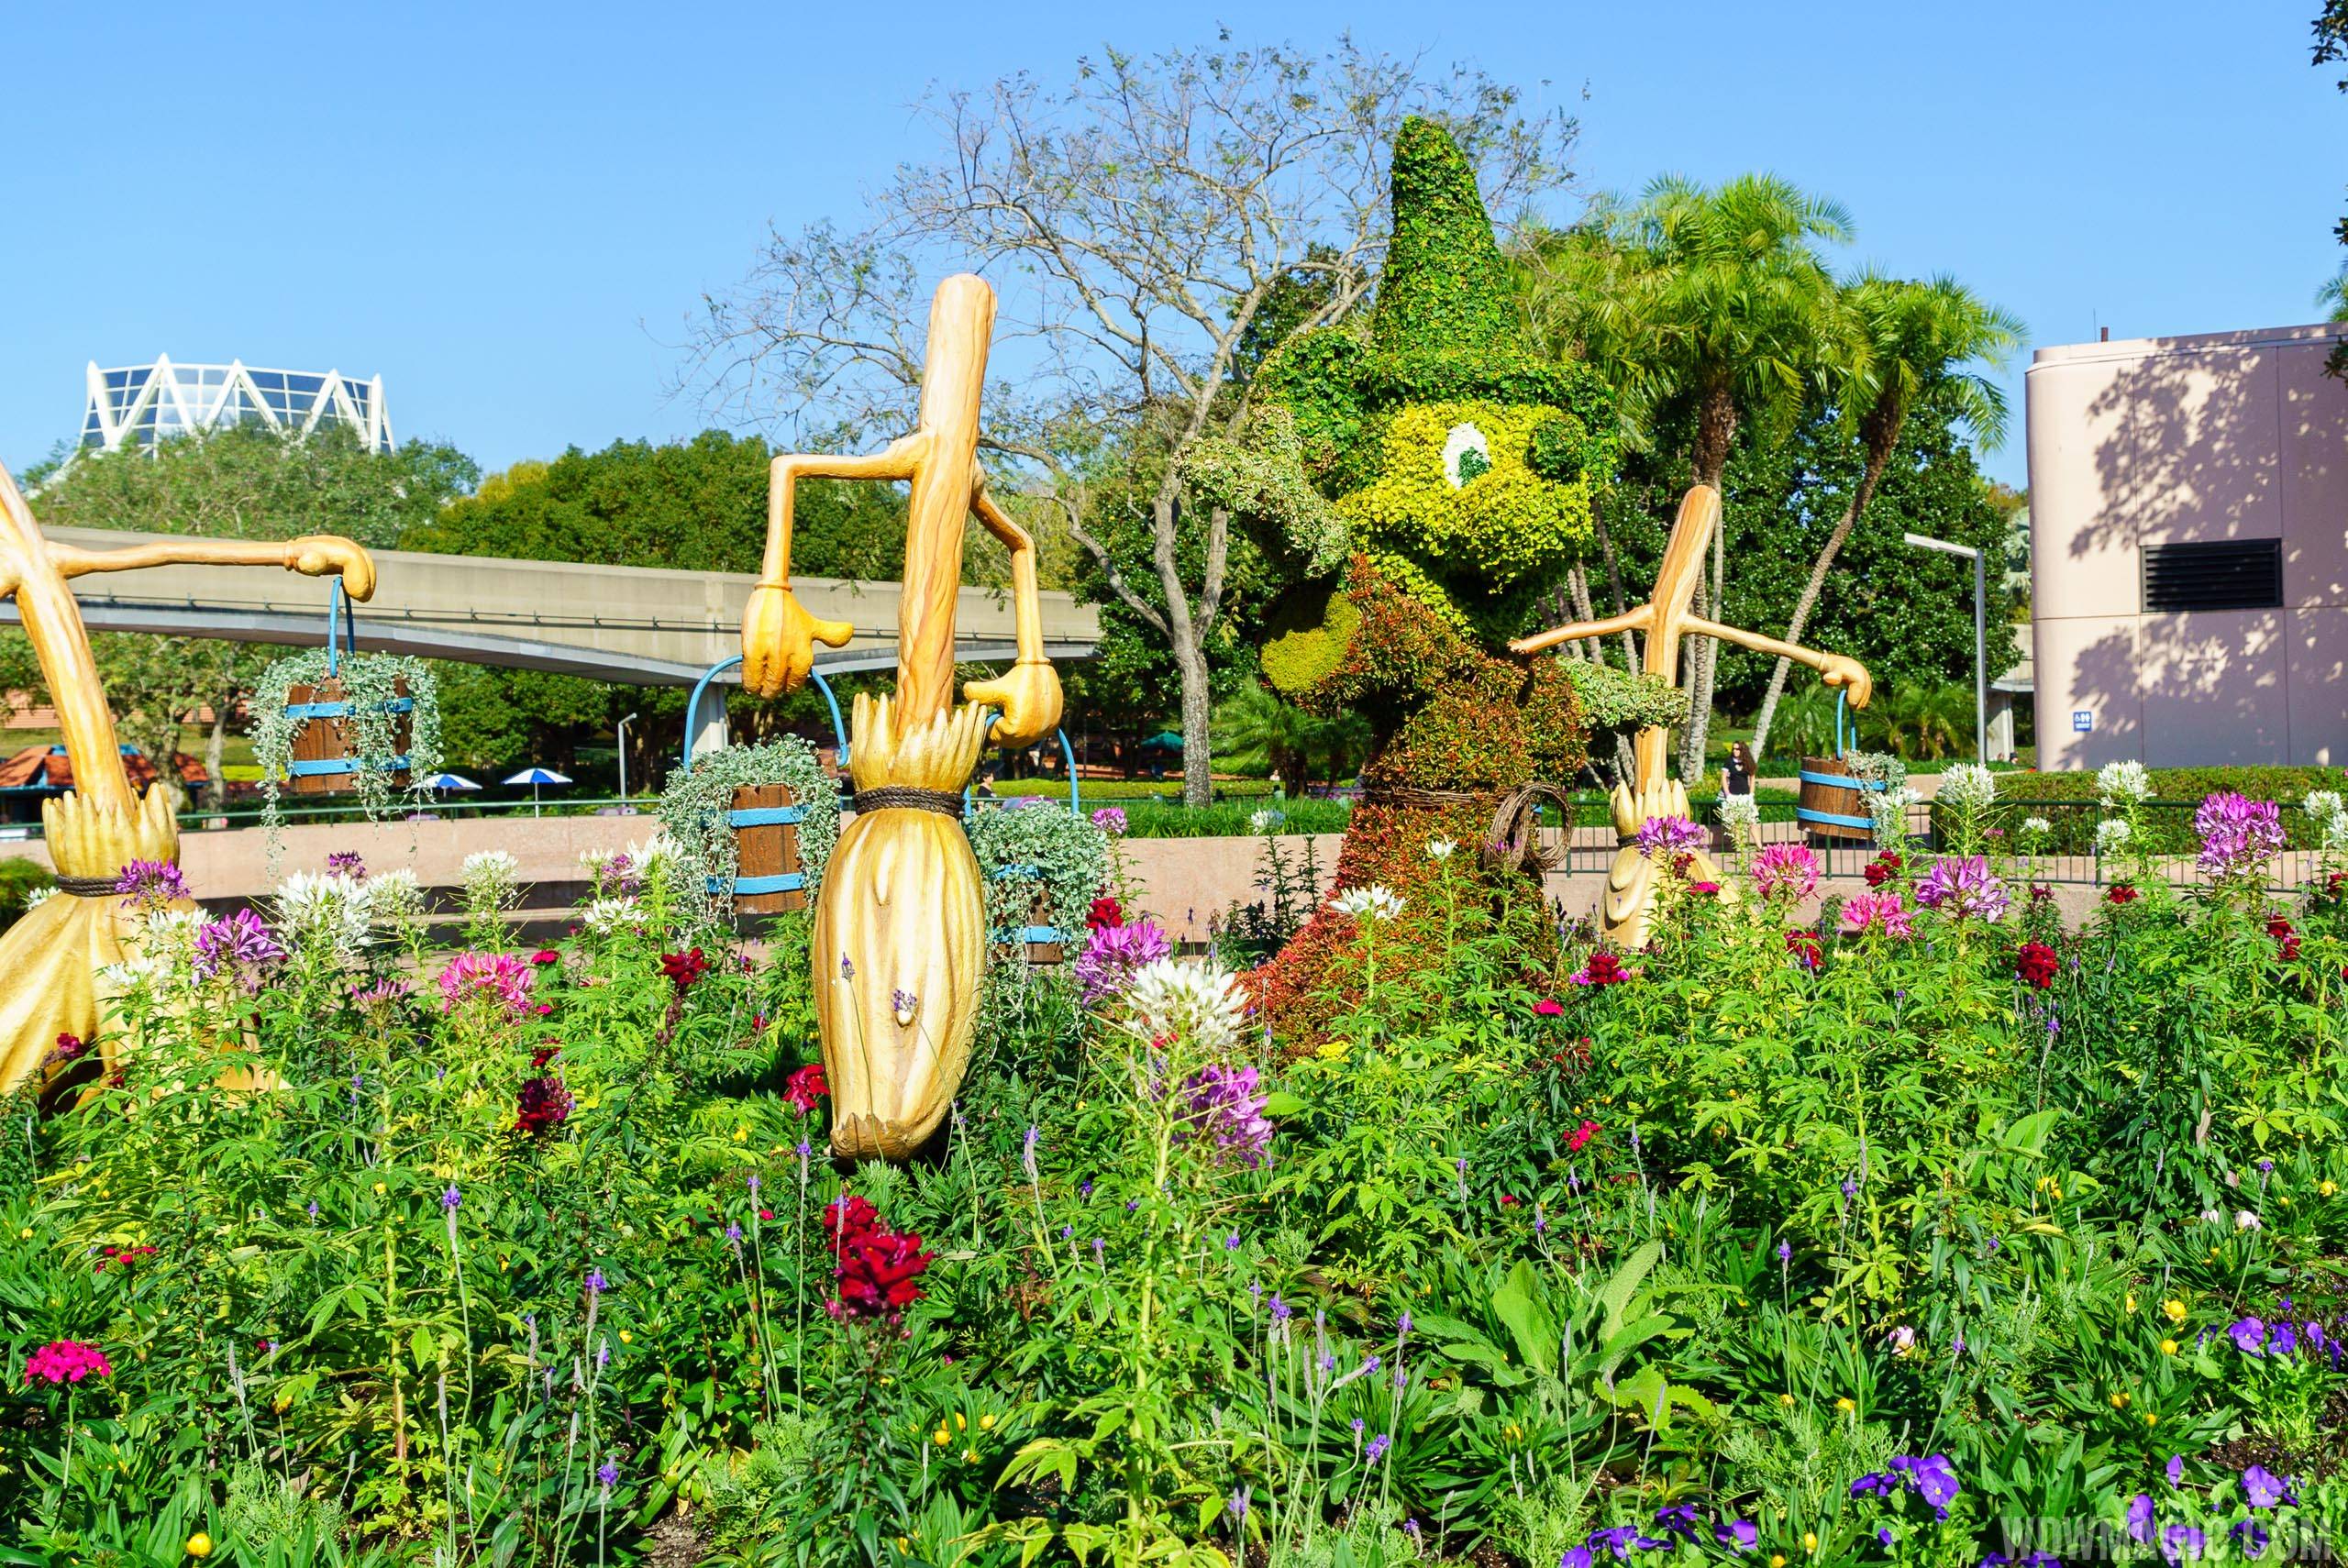 2016 Epcot International Flower and Garden Festival - Fantasia topiaries